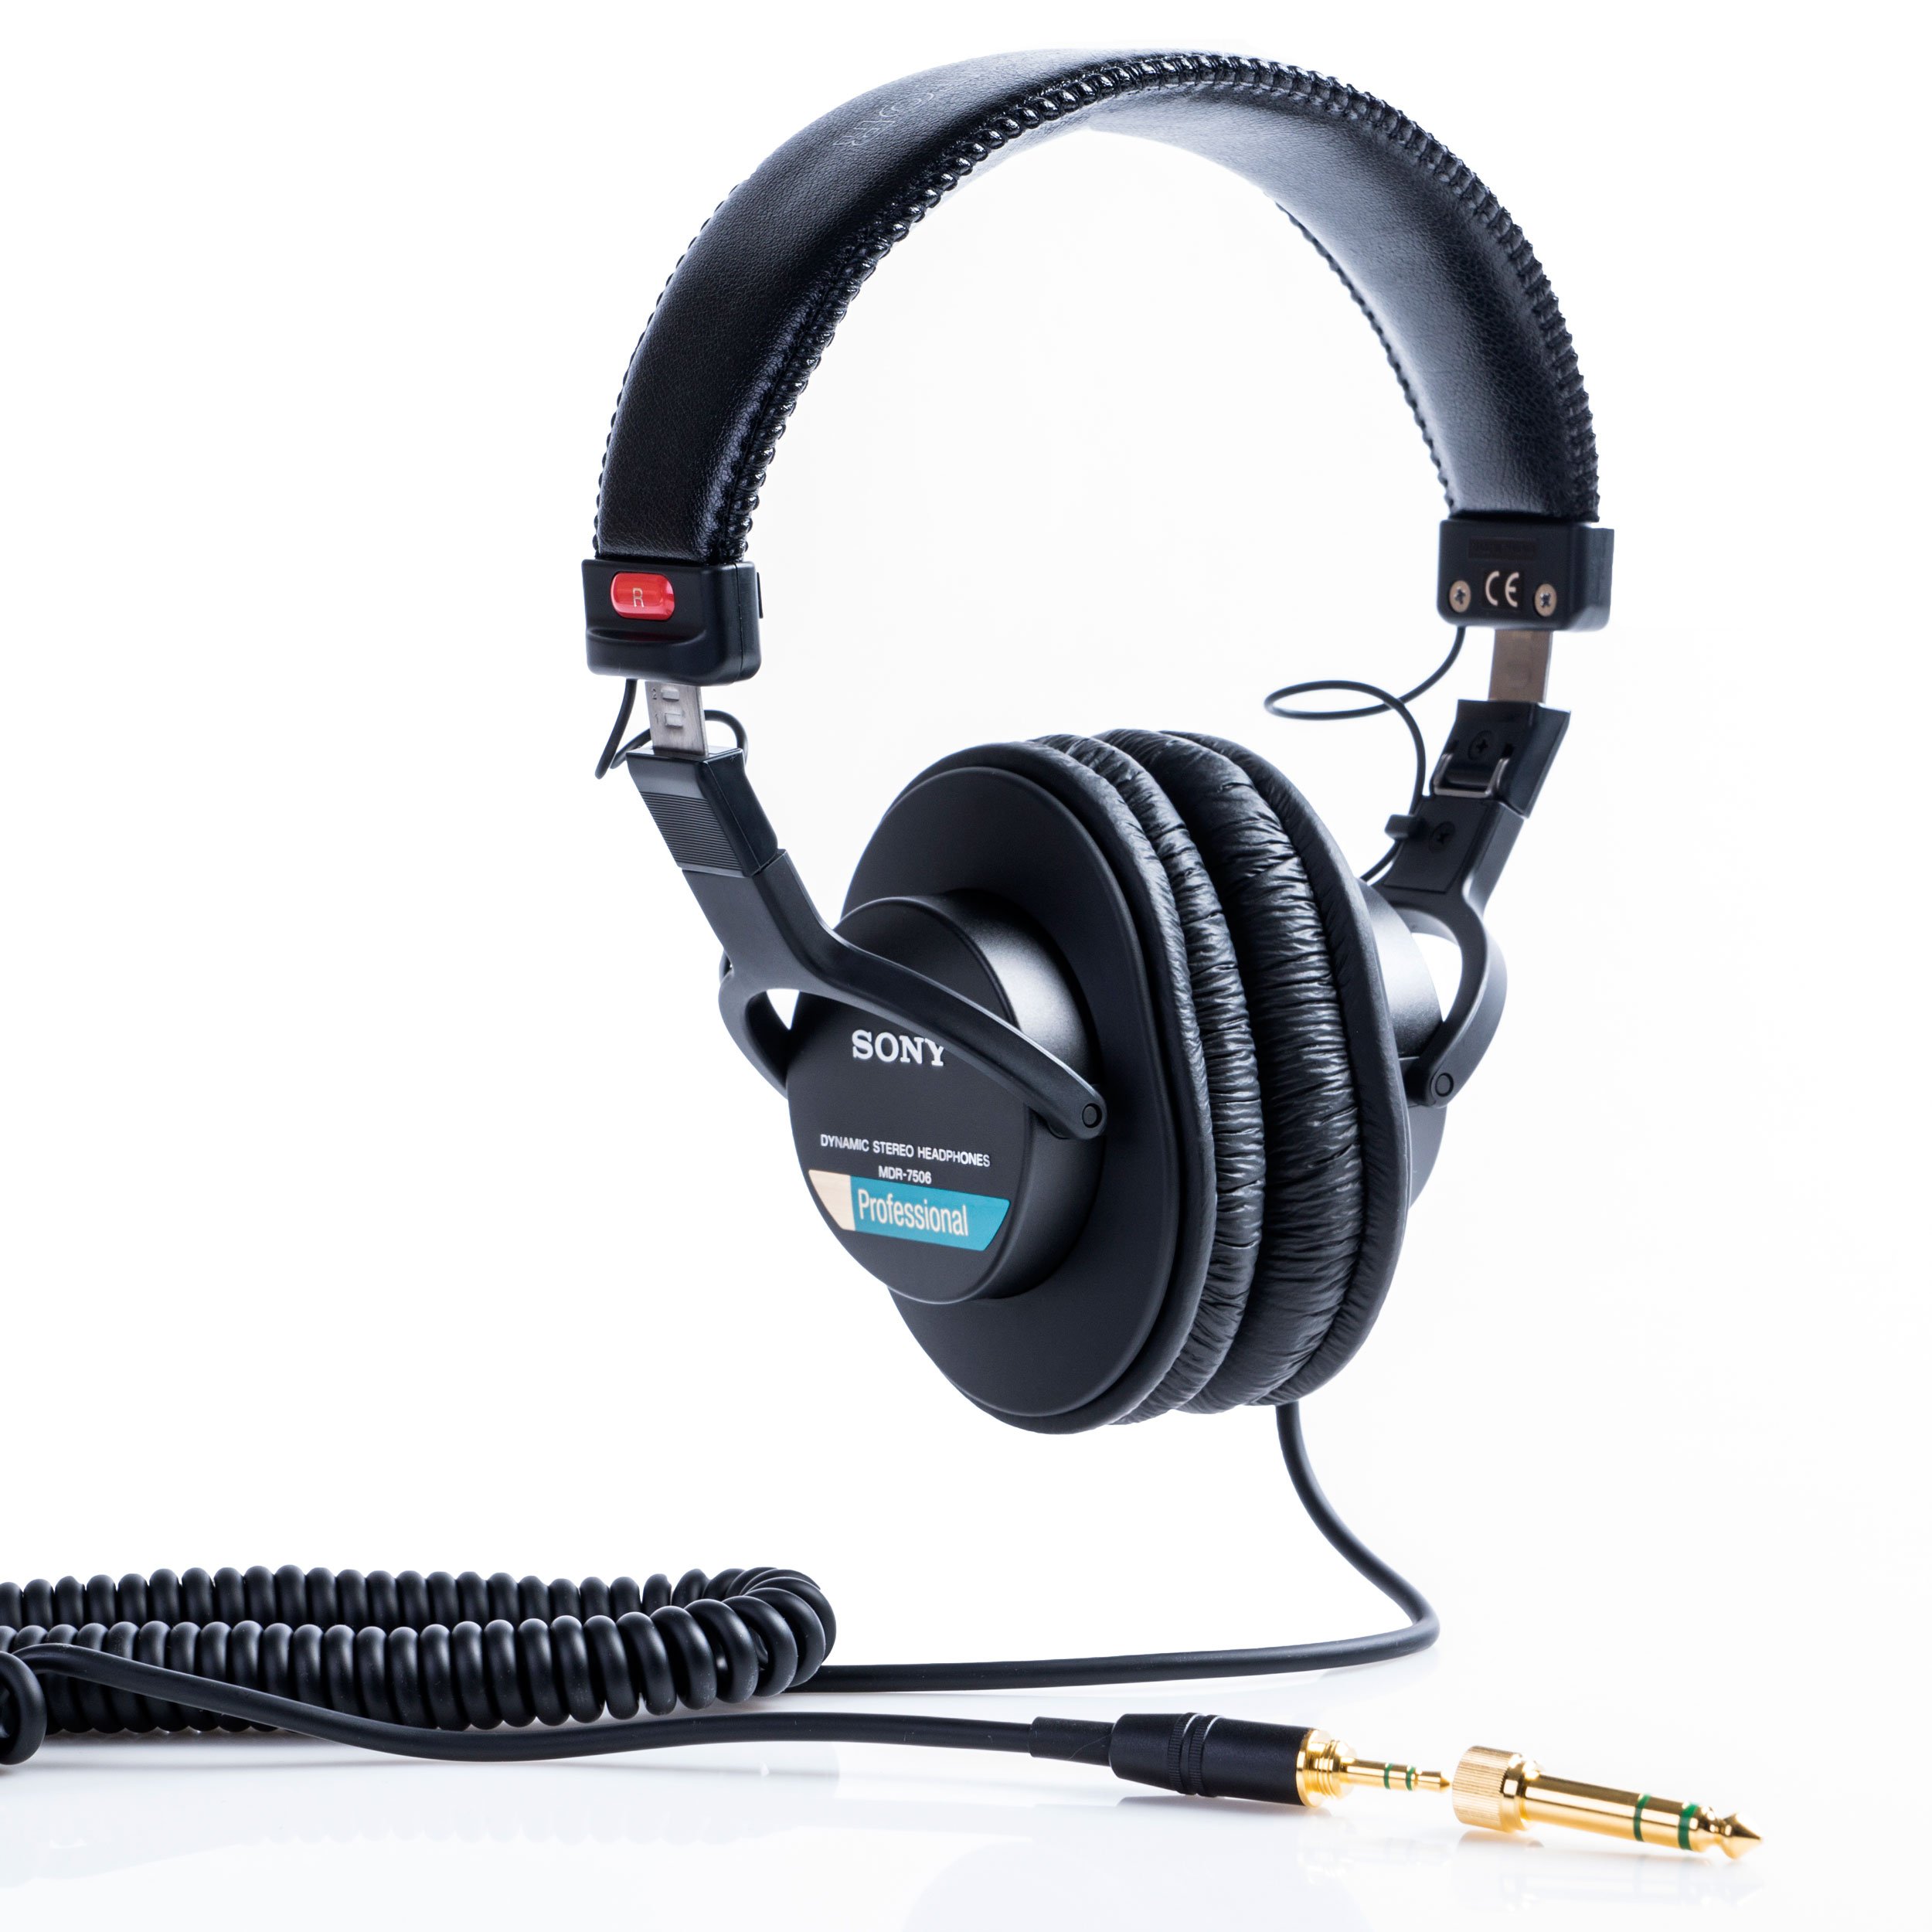 Sony Professional Large Diaphragm Headphones (MDR7506) - $74.99 + F/S - Amazon